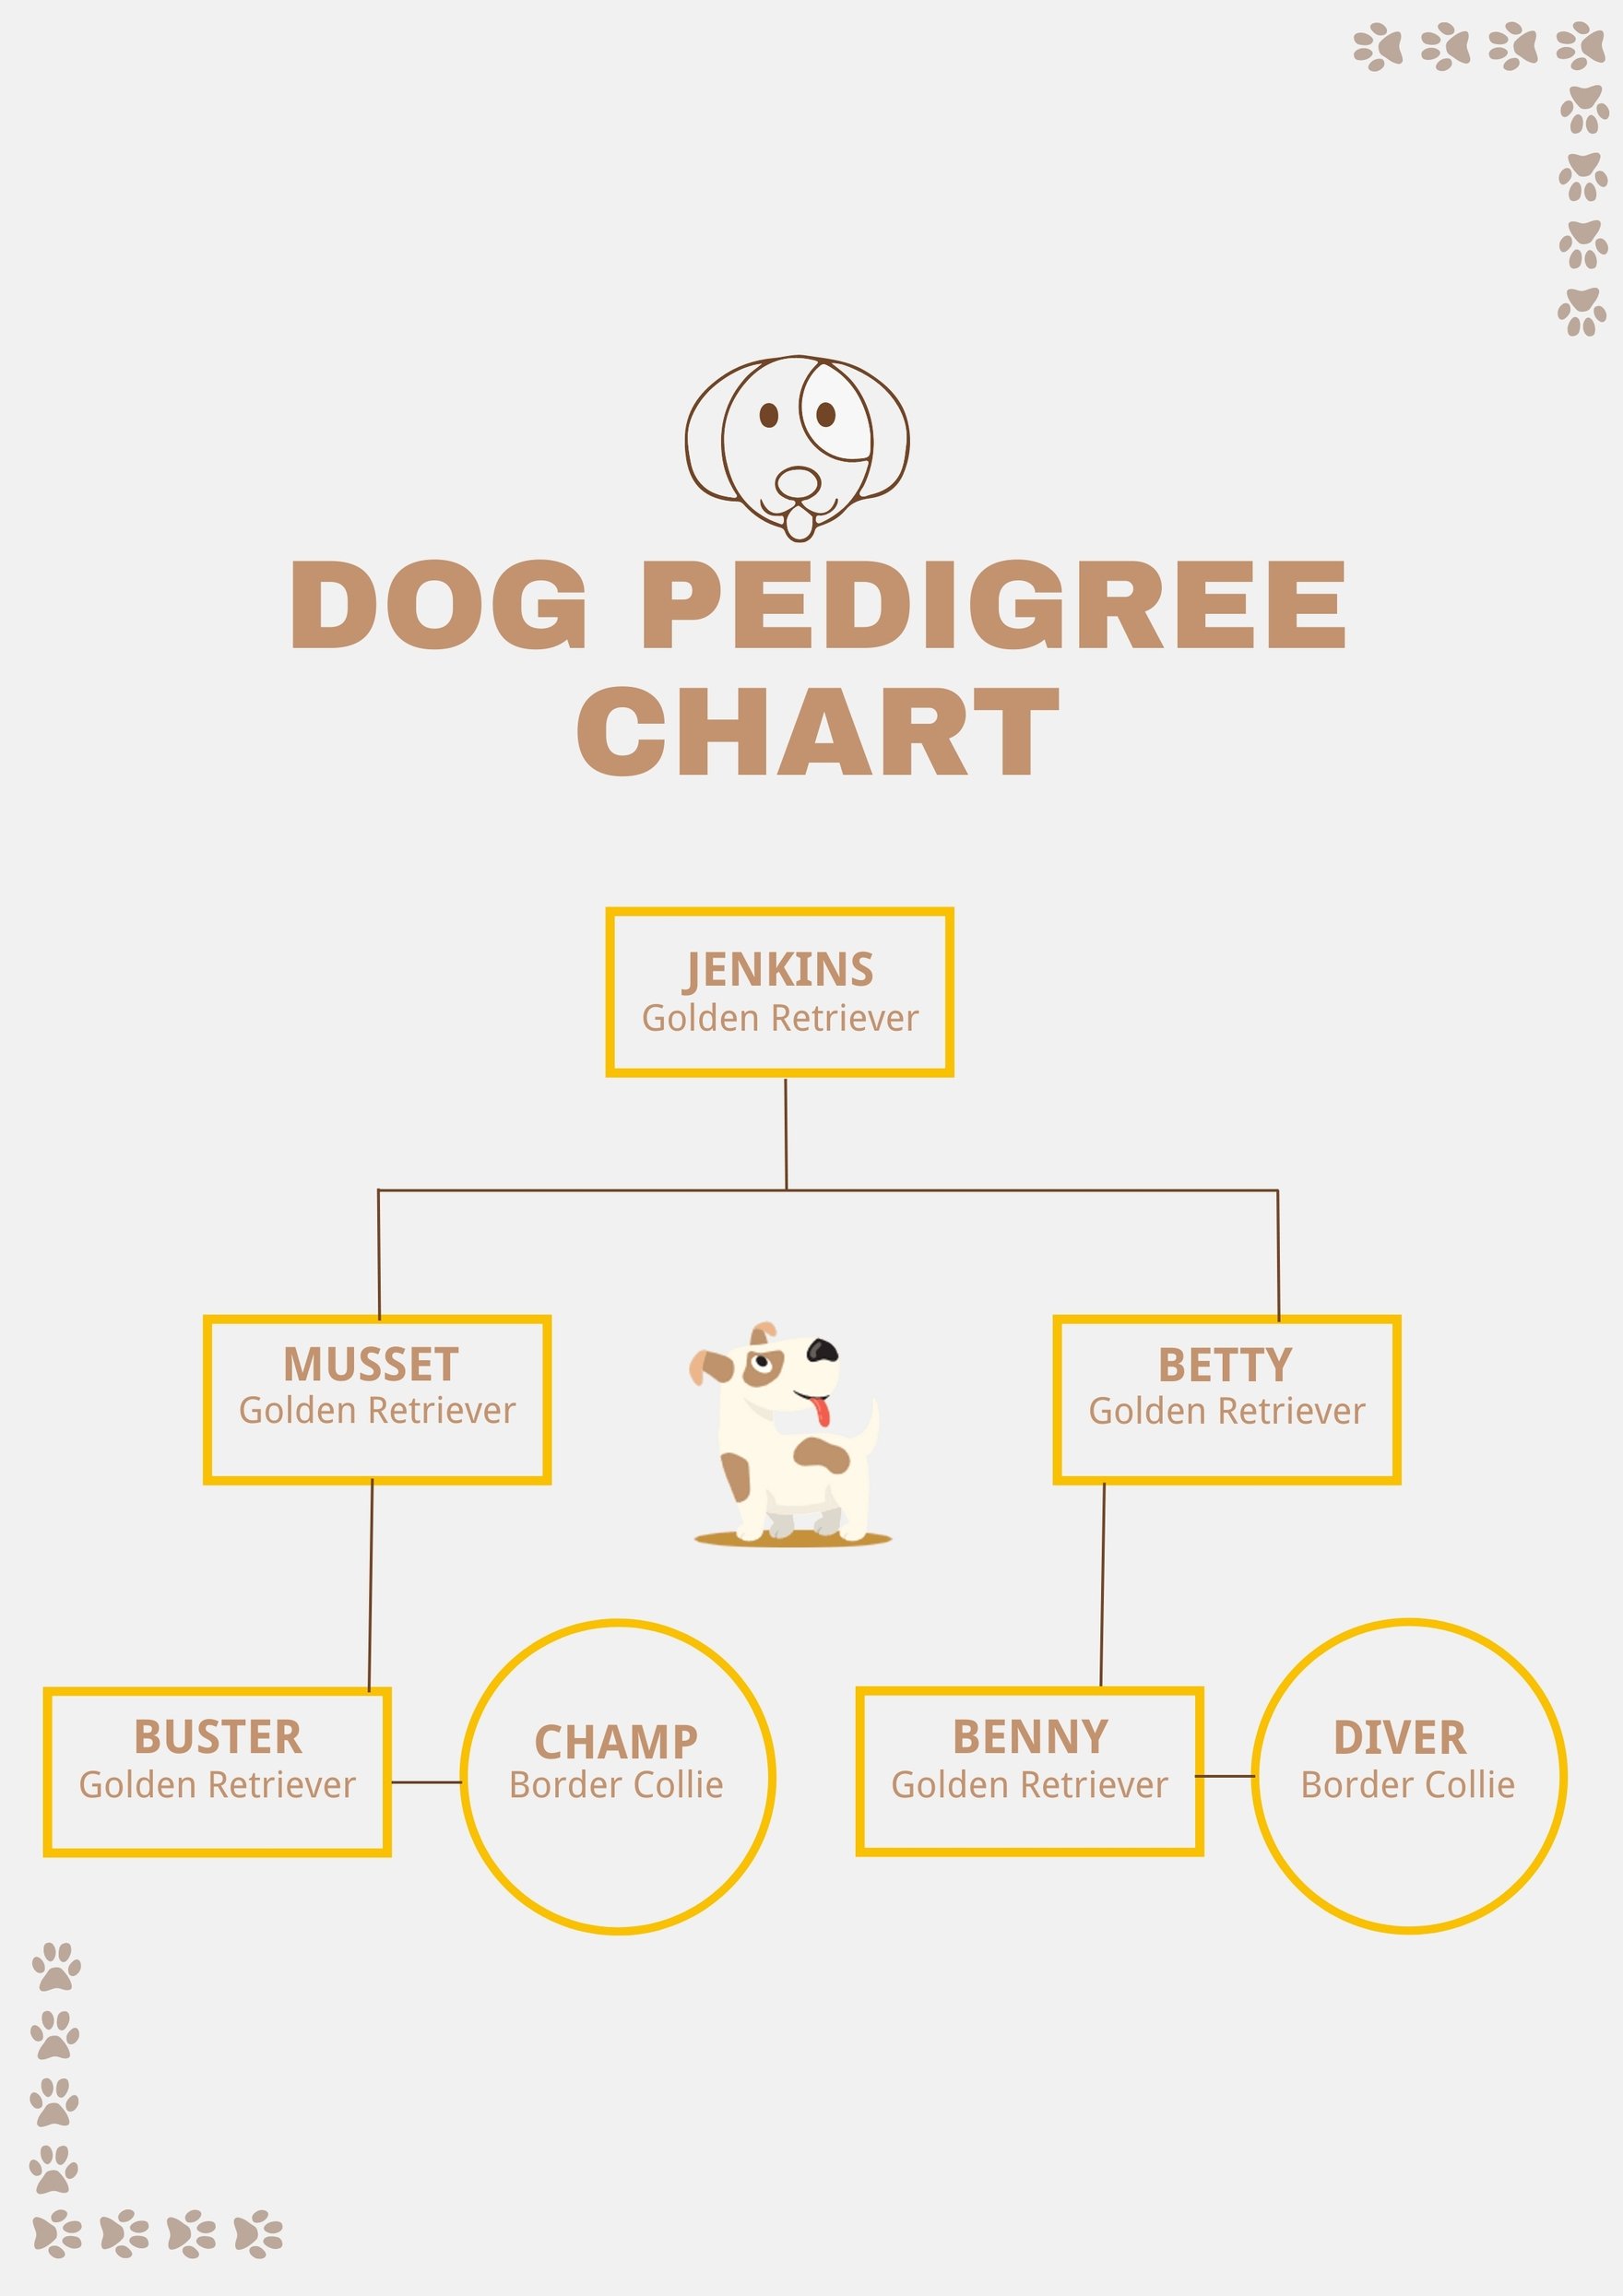 Dog Pedigree Chart